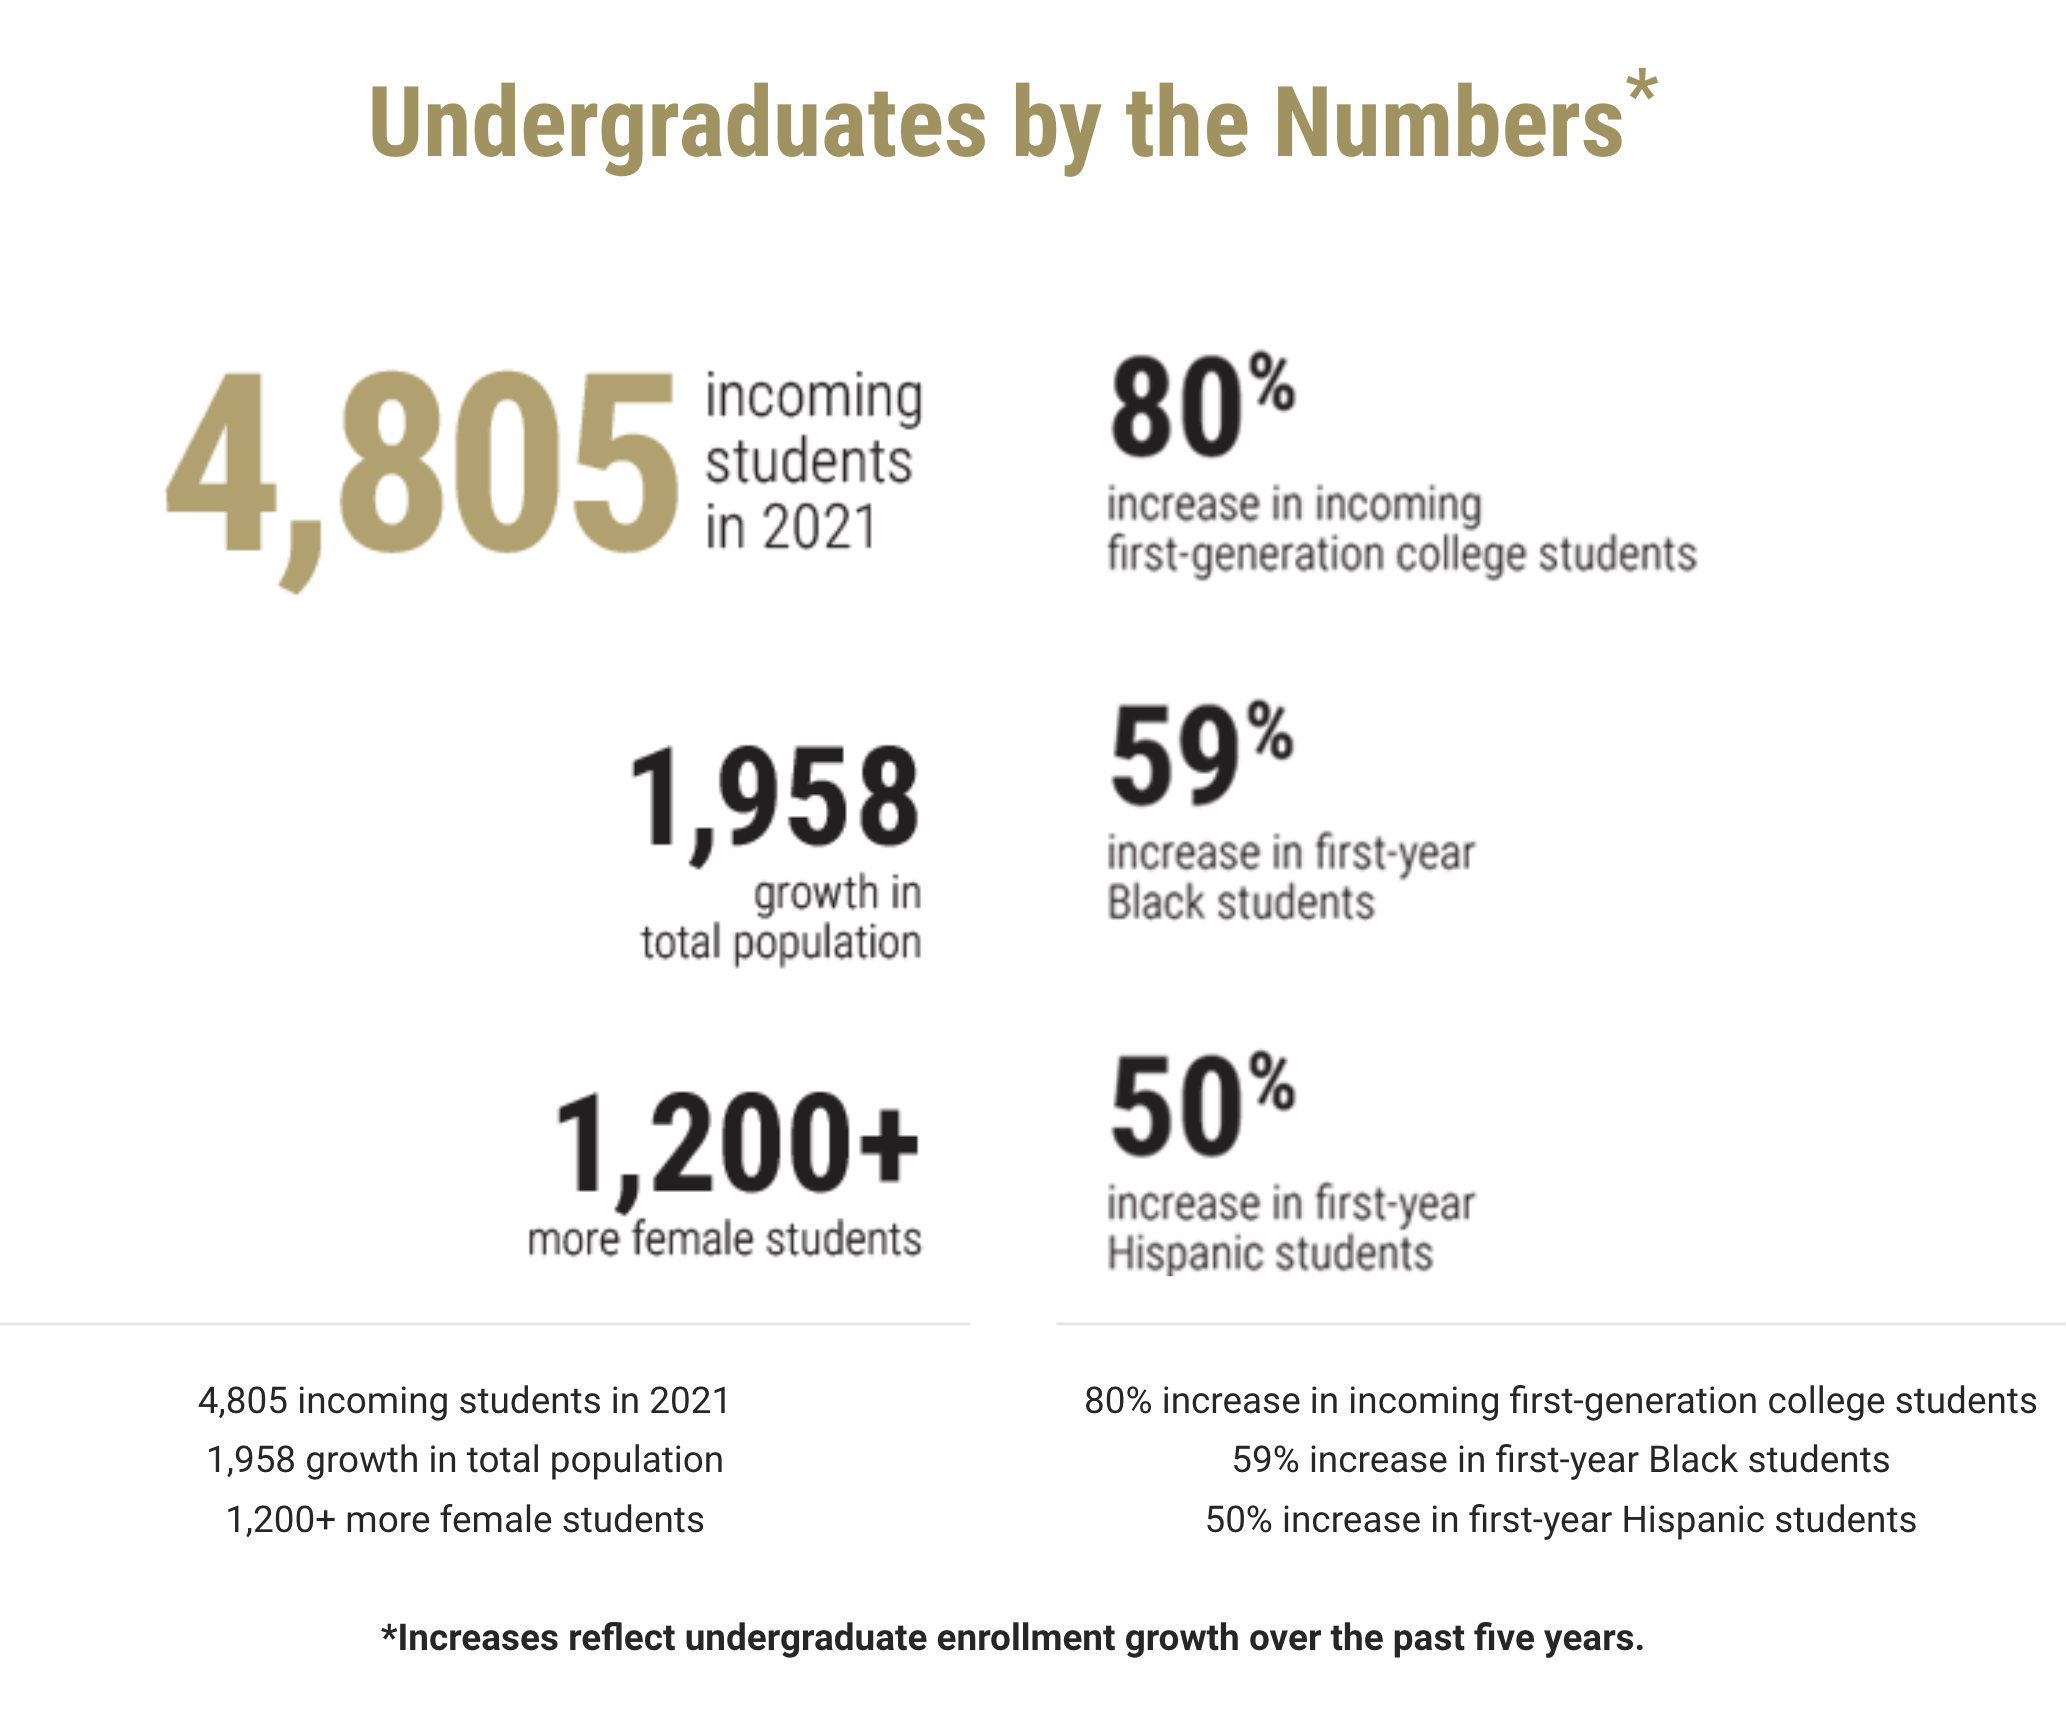 Undergraduate enrollment statistics displayed visually